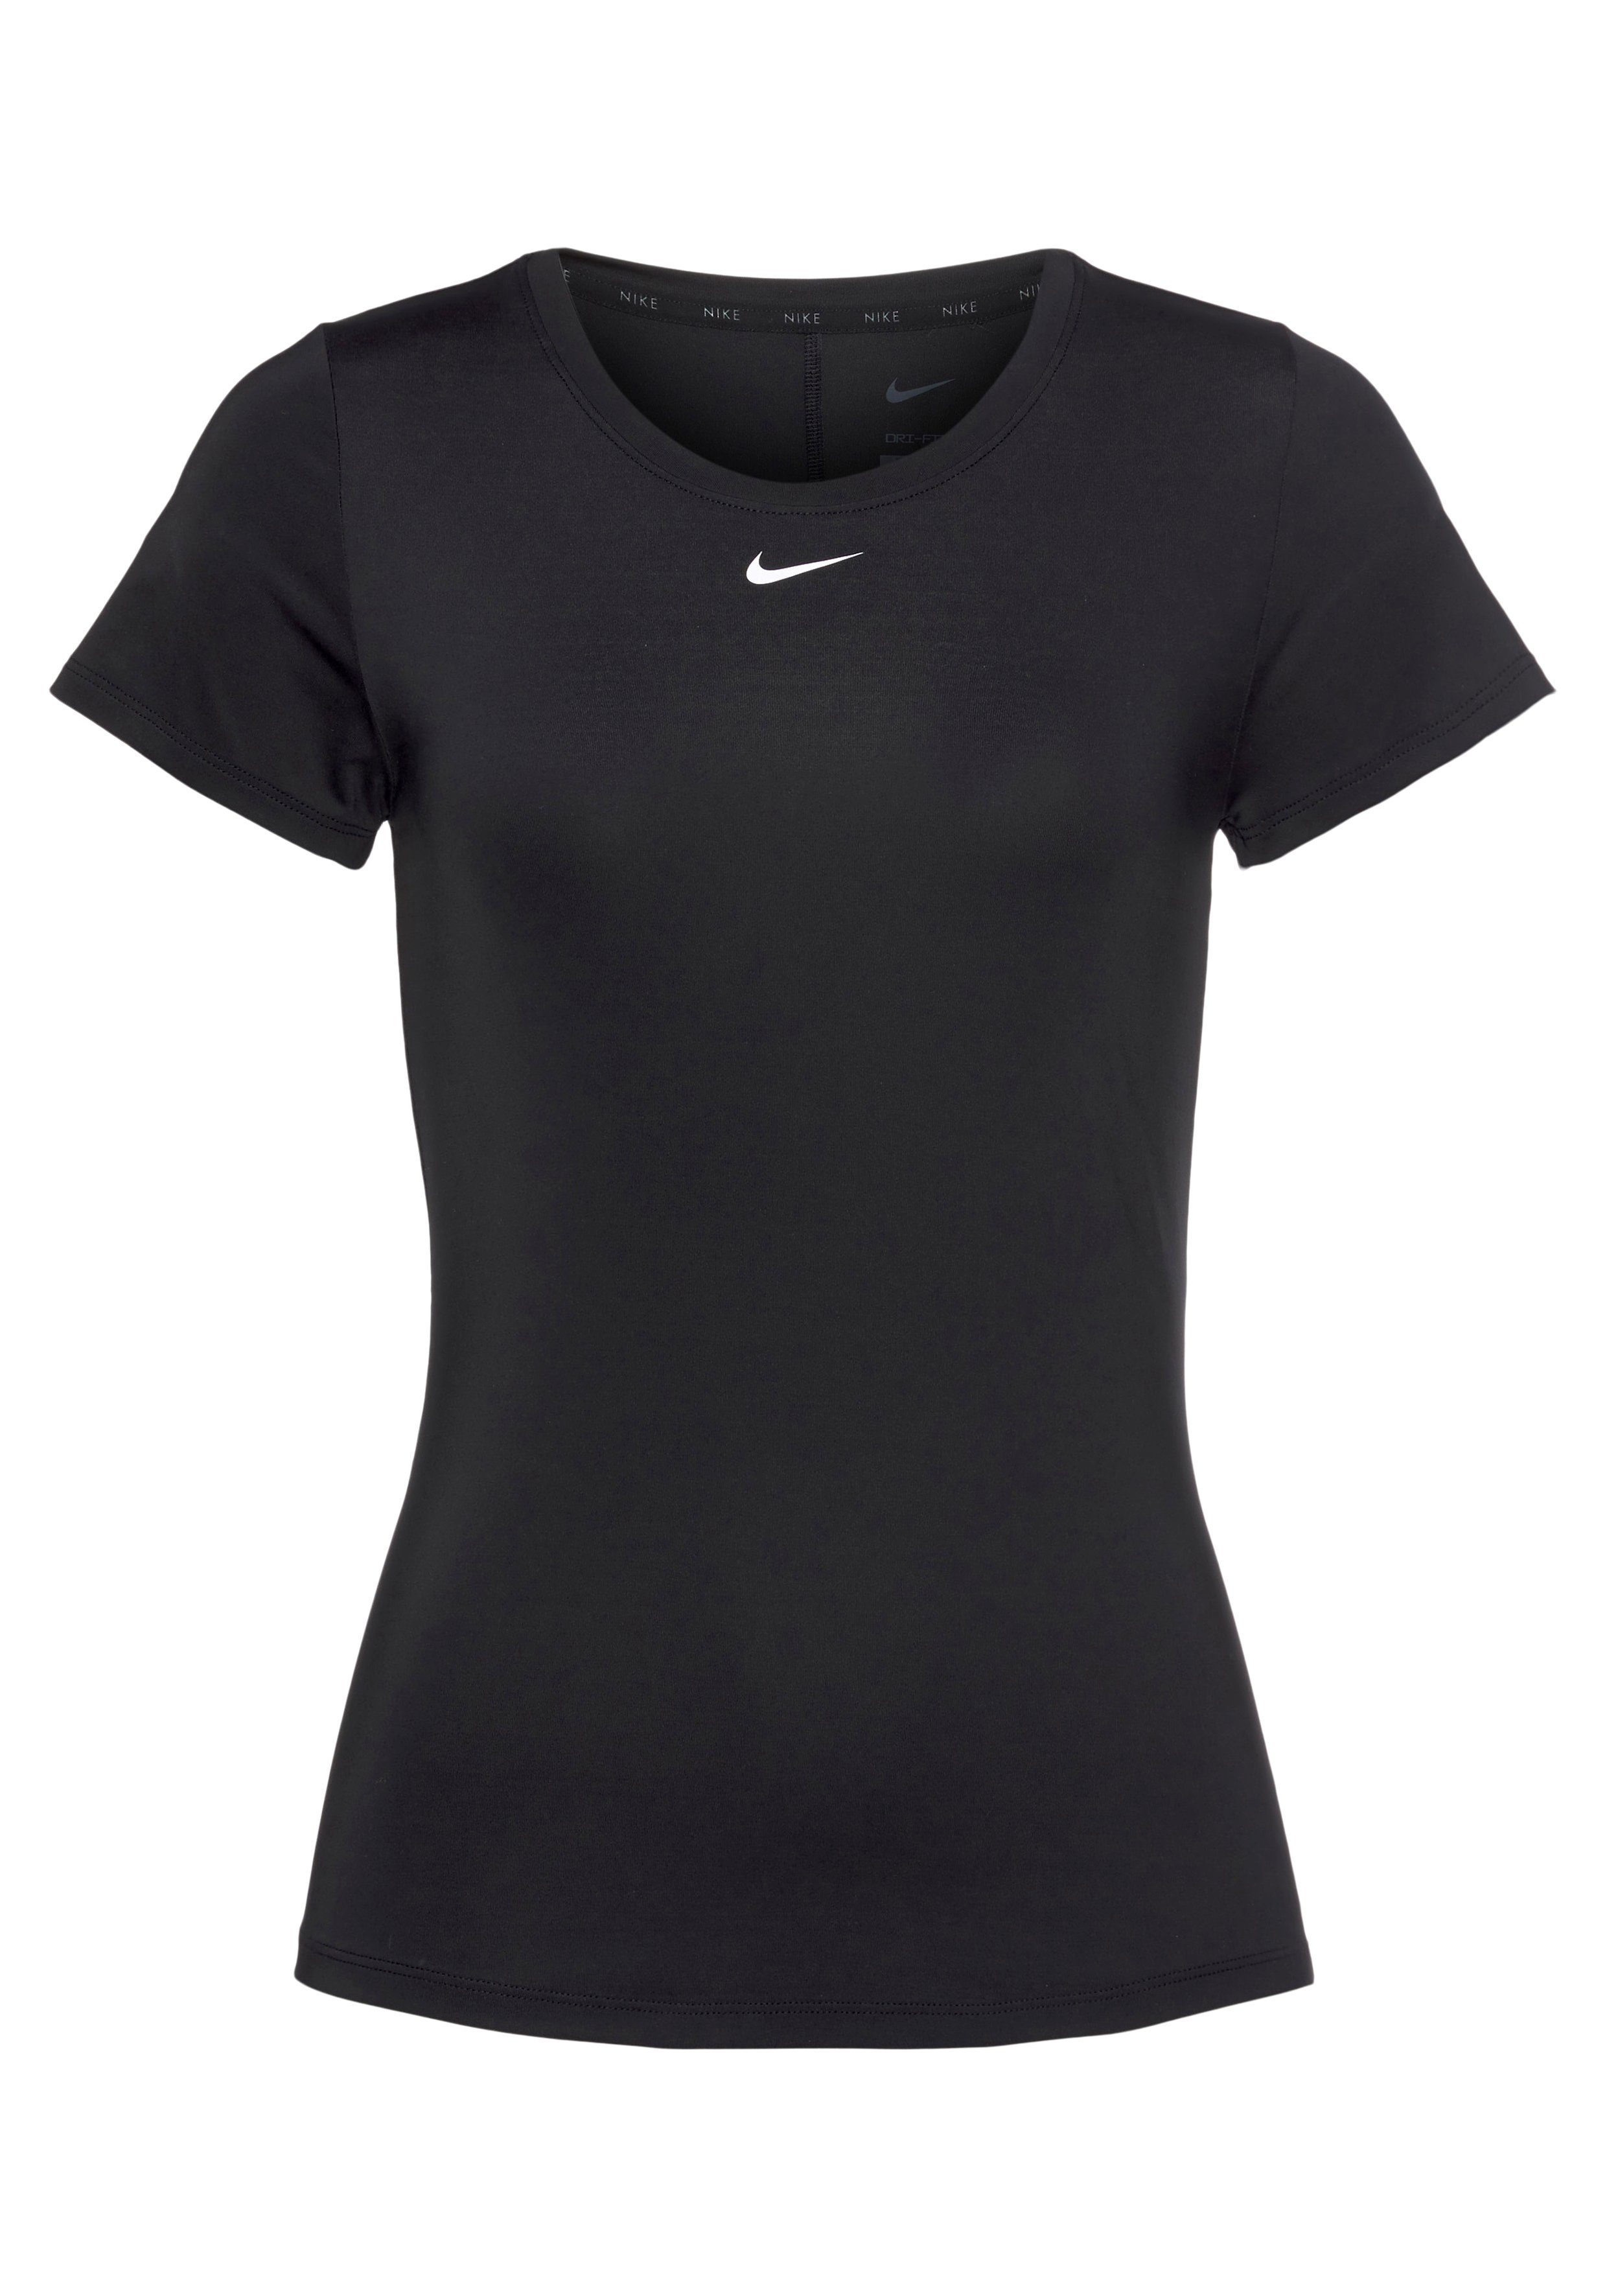 TOP ONE SLIM DRI-FIT SHORT-SLEEVE Trainingsshirt schwarz FIT WOMEN'S Nike